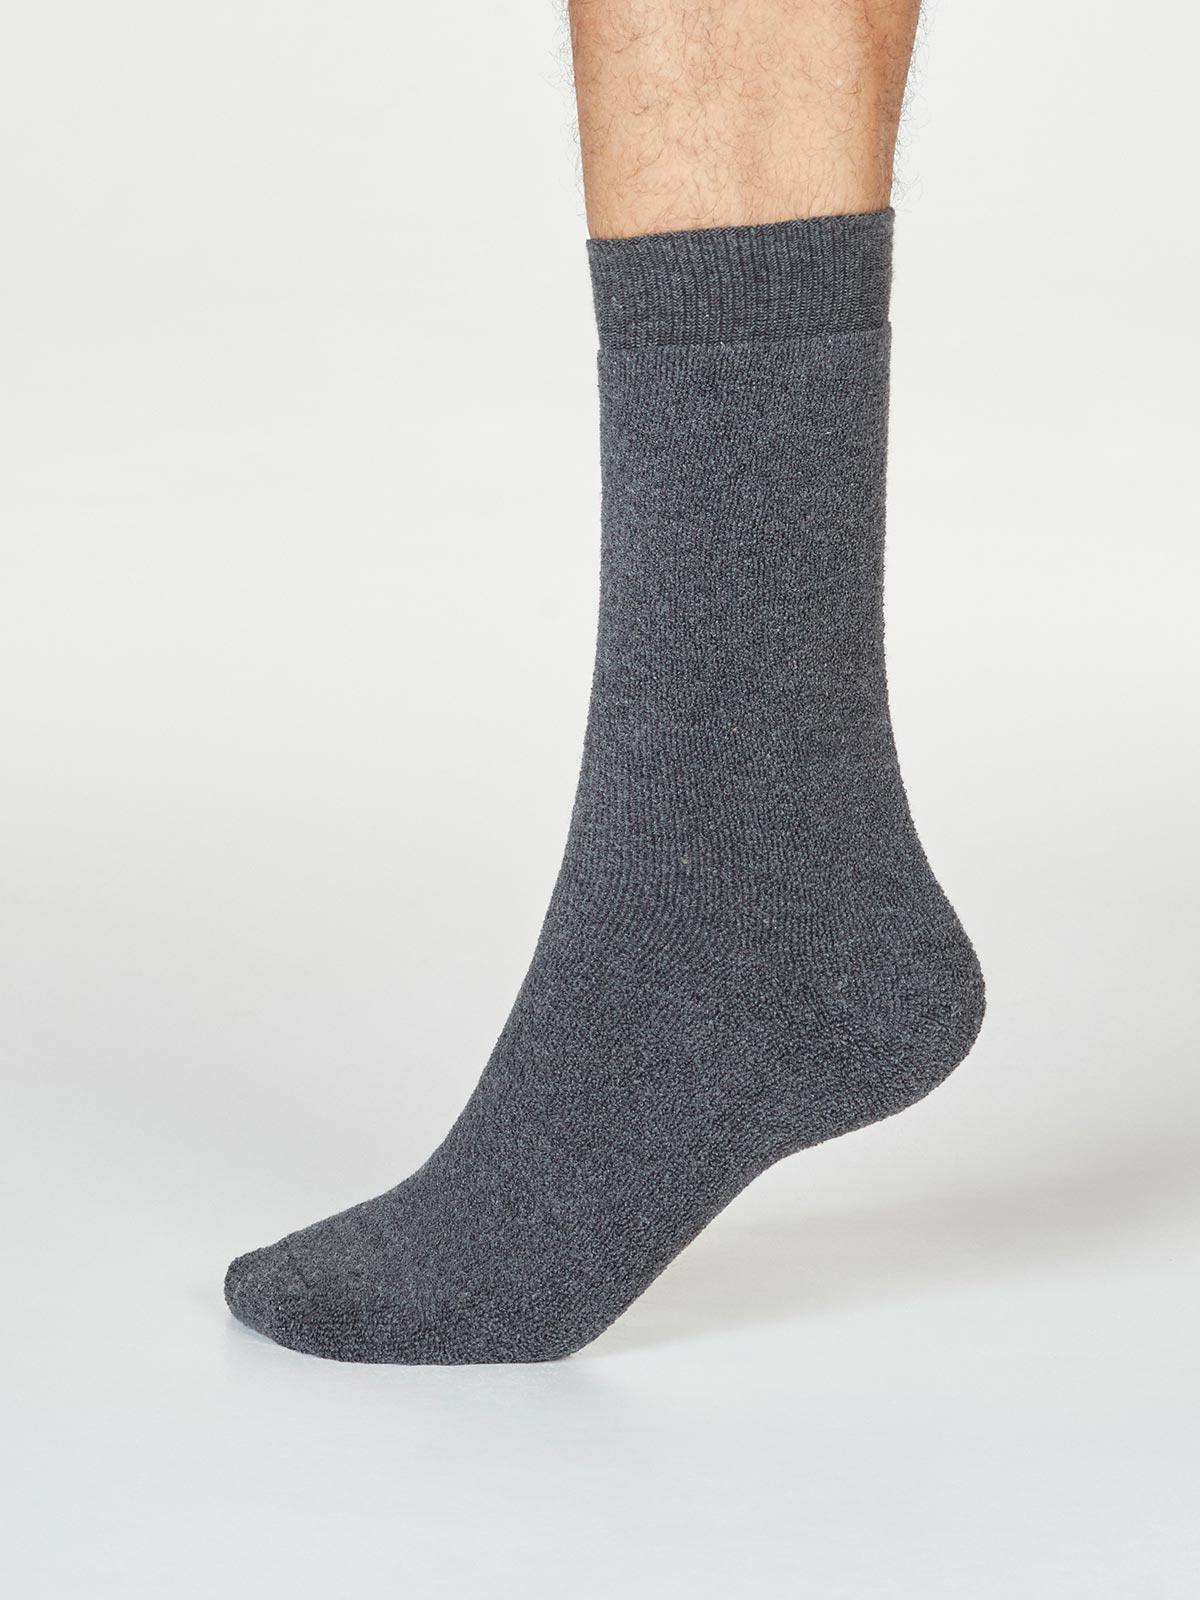 Walker Socks - Dark Grey Marle - Thought Clothing UK